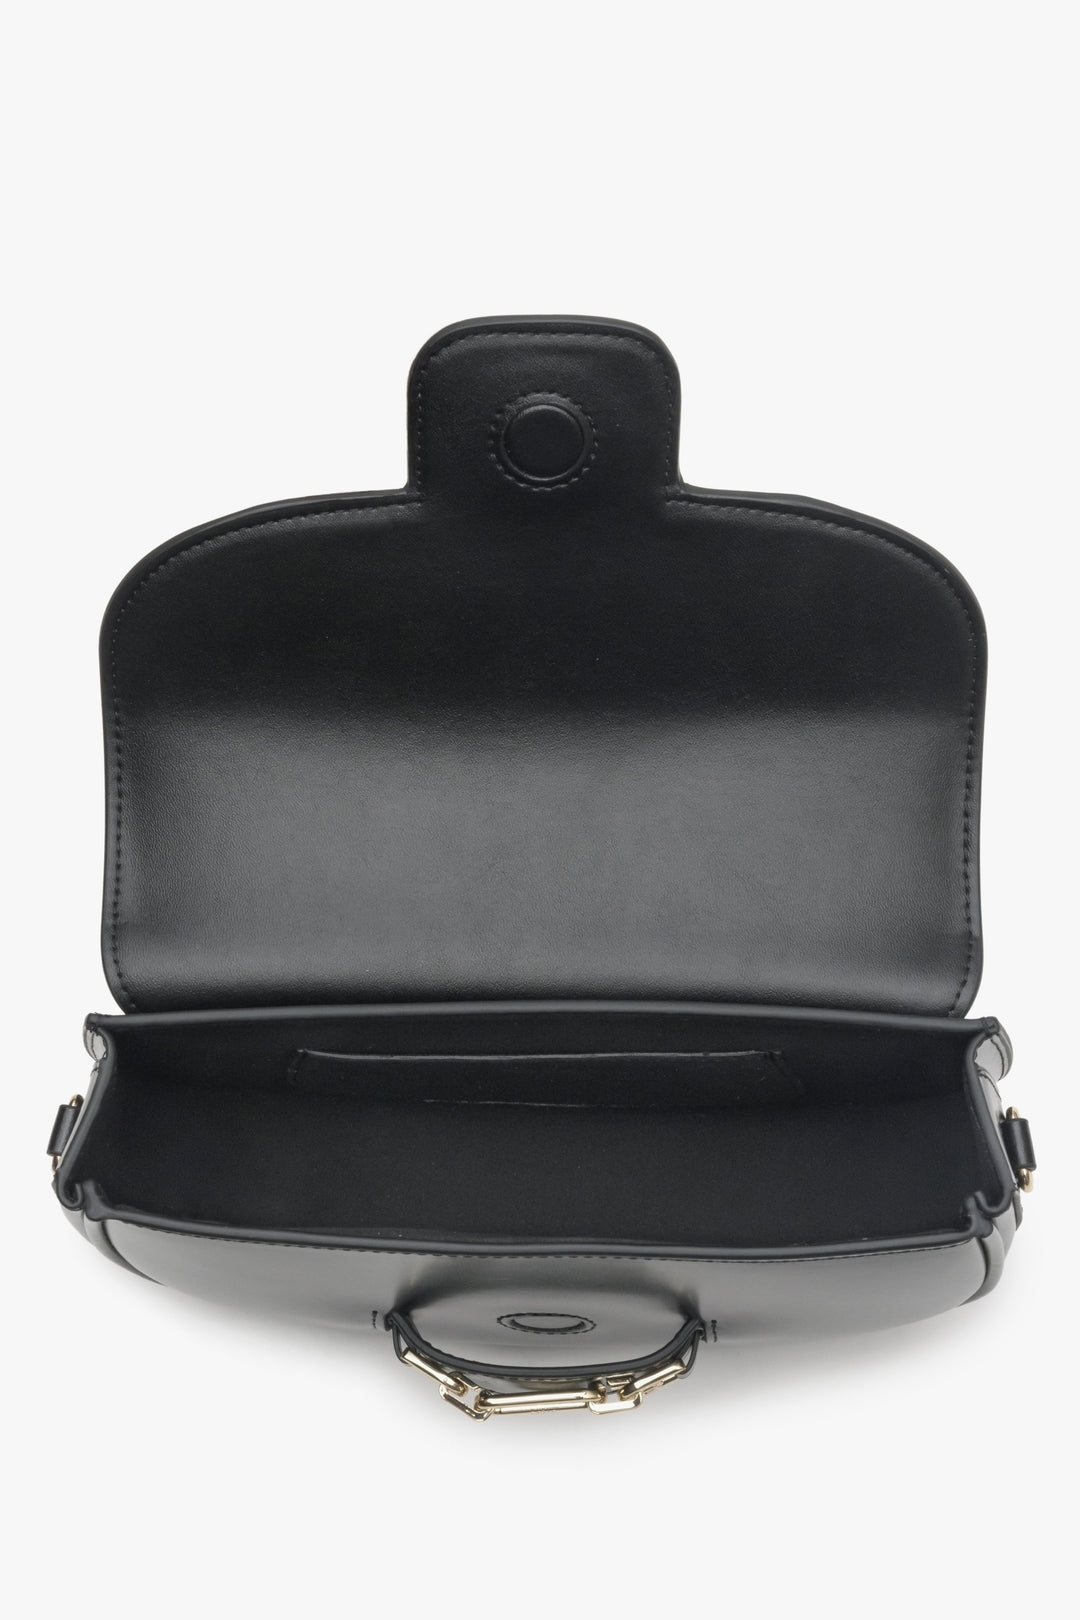 Estro women's black bag with adjustable strap - close-up of the interior.